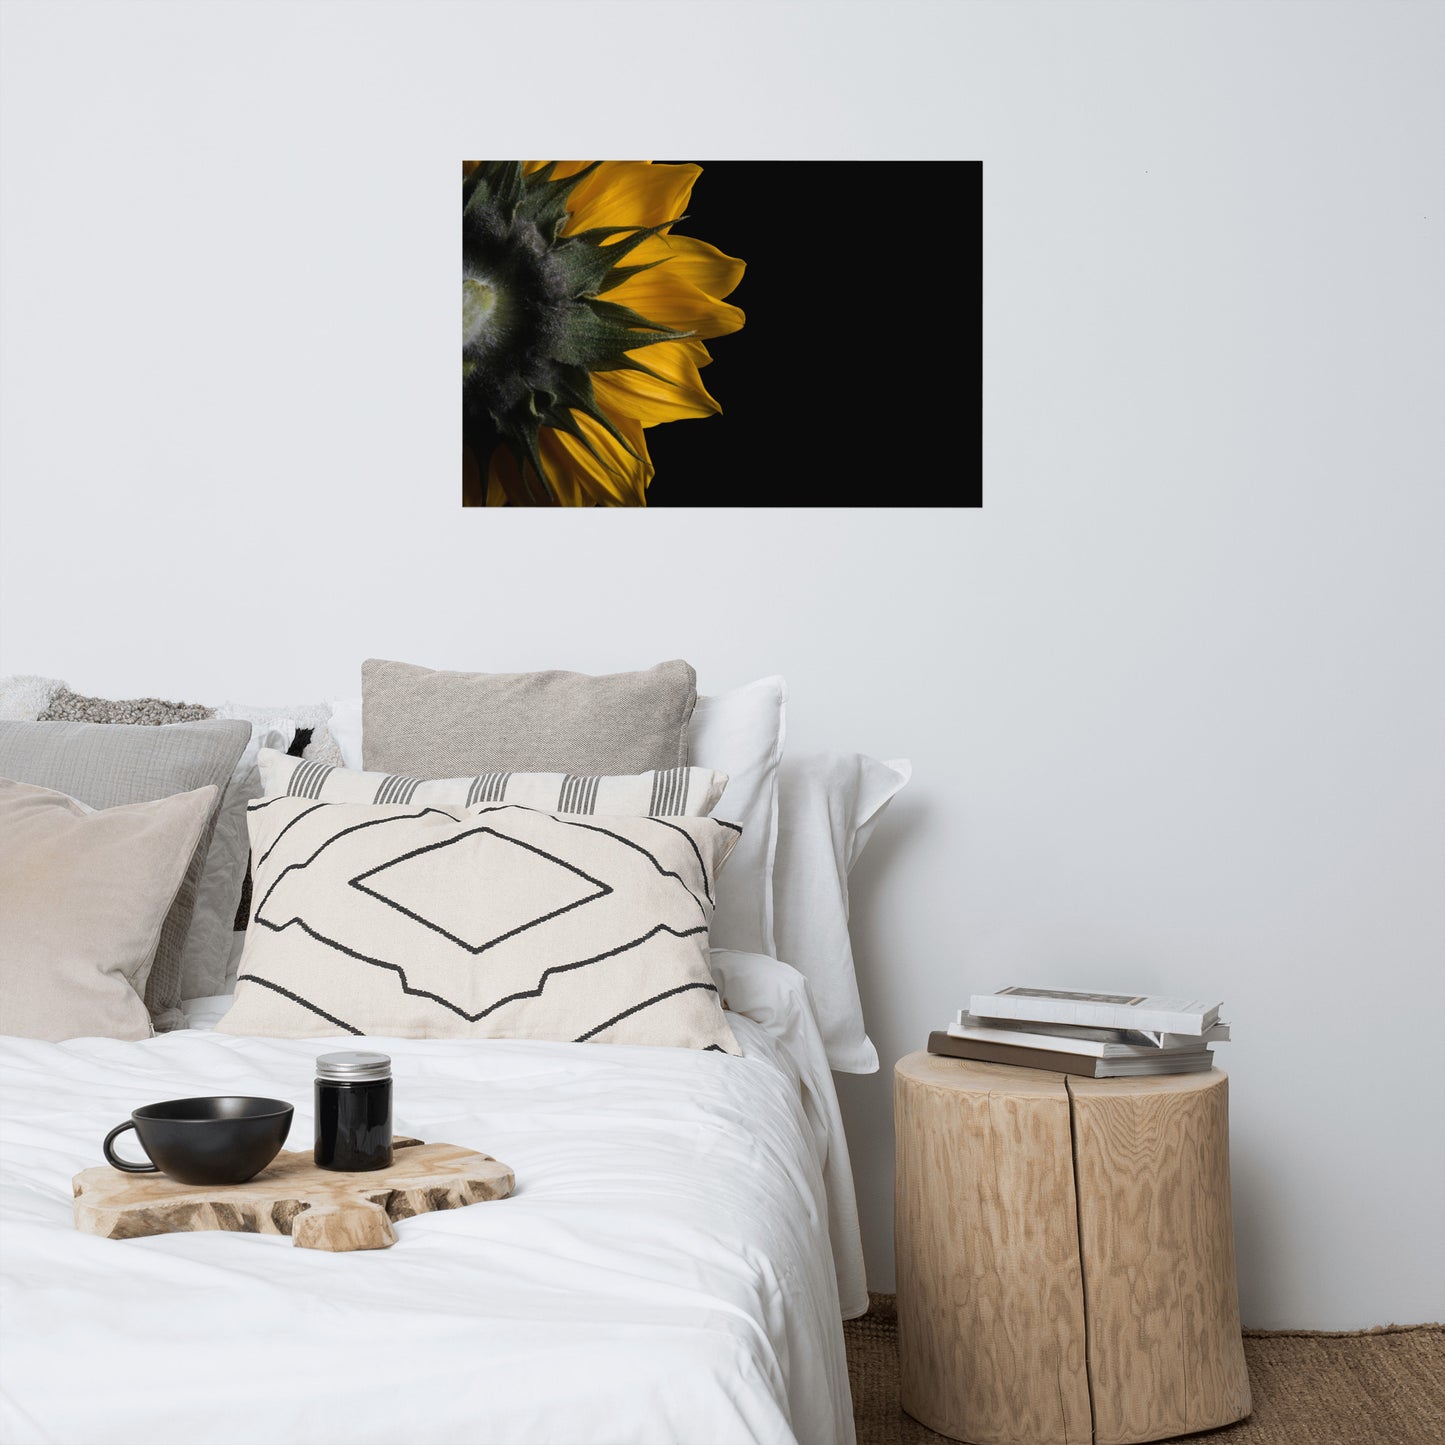 Backside of Sunflower Floral Nature Photo Loose Unframed Wall Art Prints